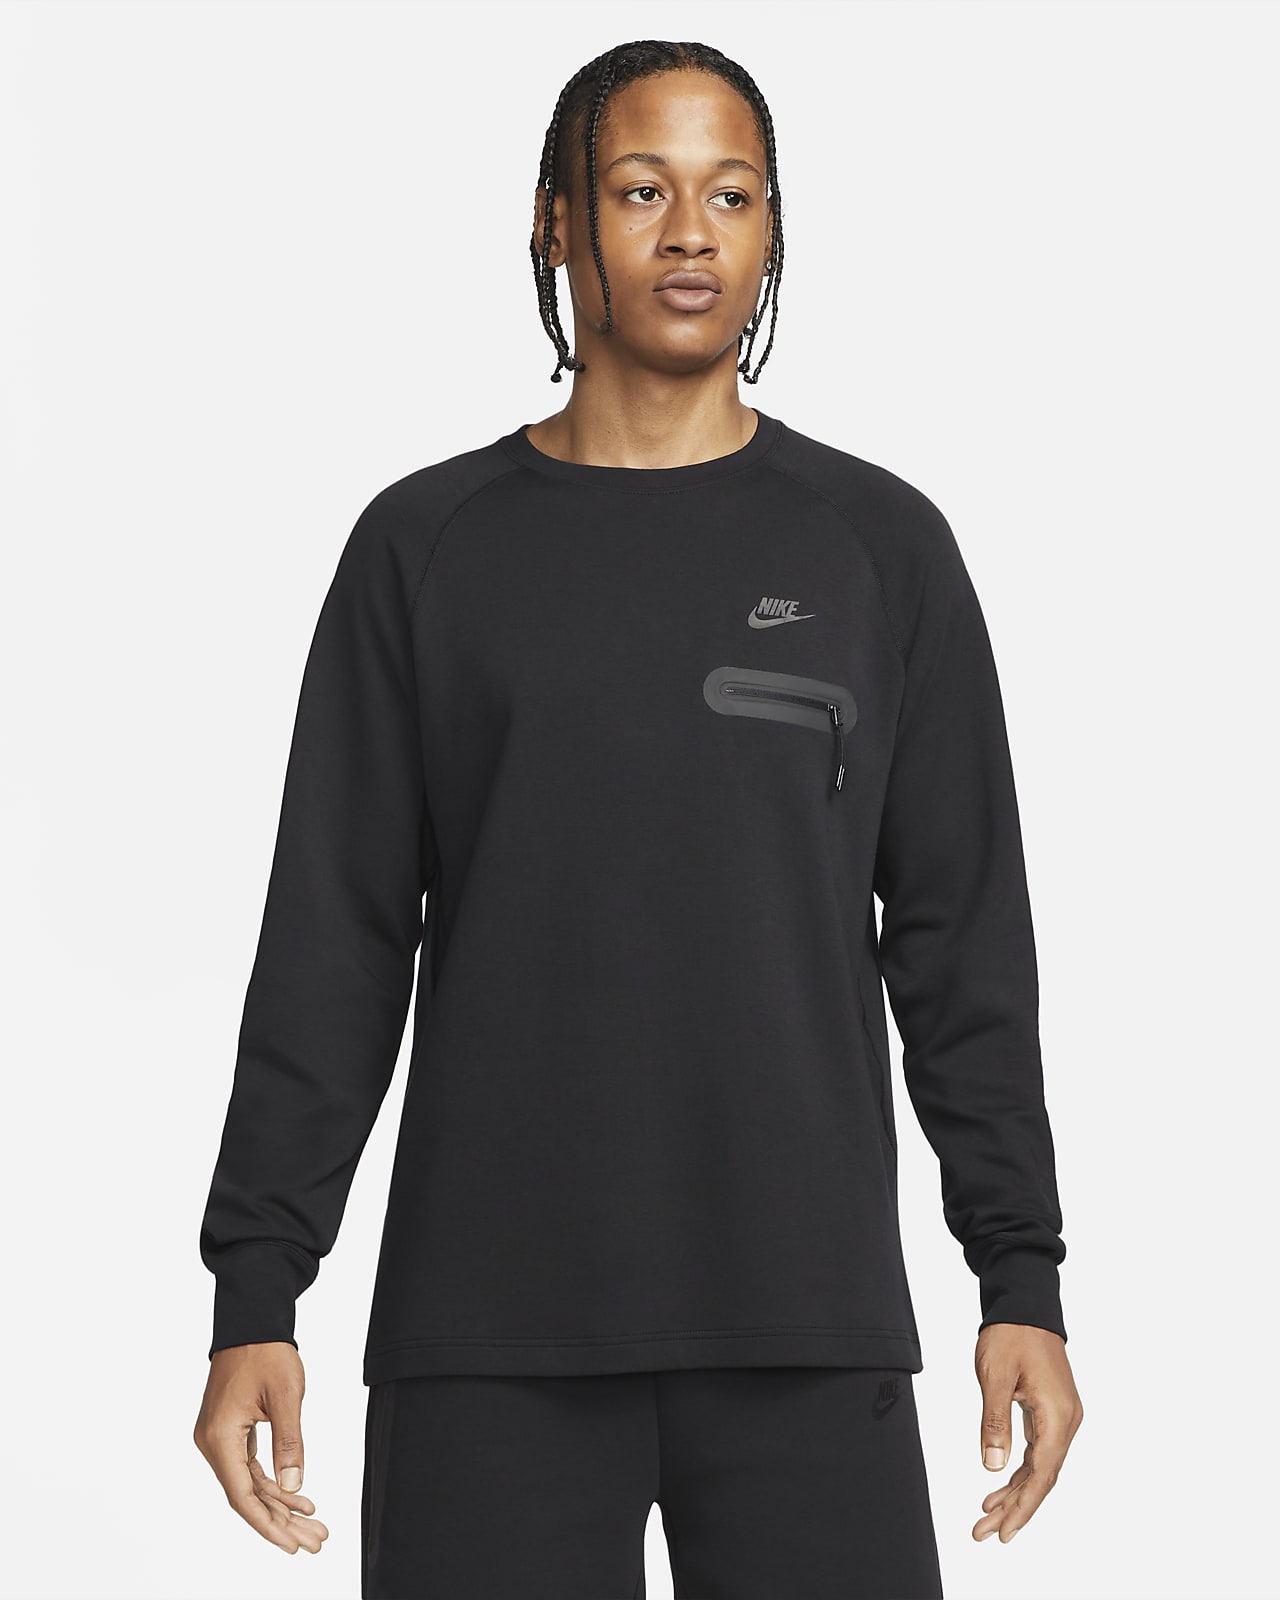 Lehké pánské tričko Nike Tech Fleece s dlouhým rukávem